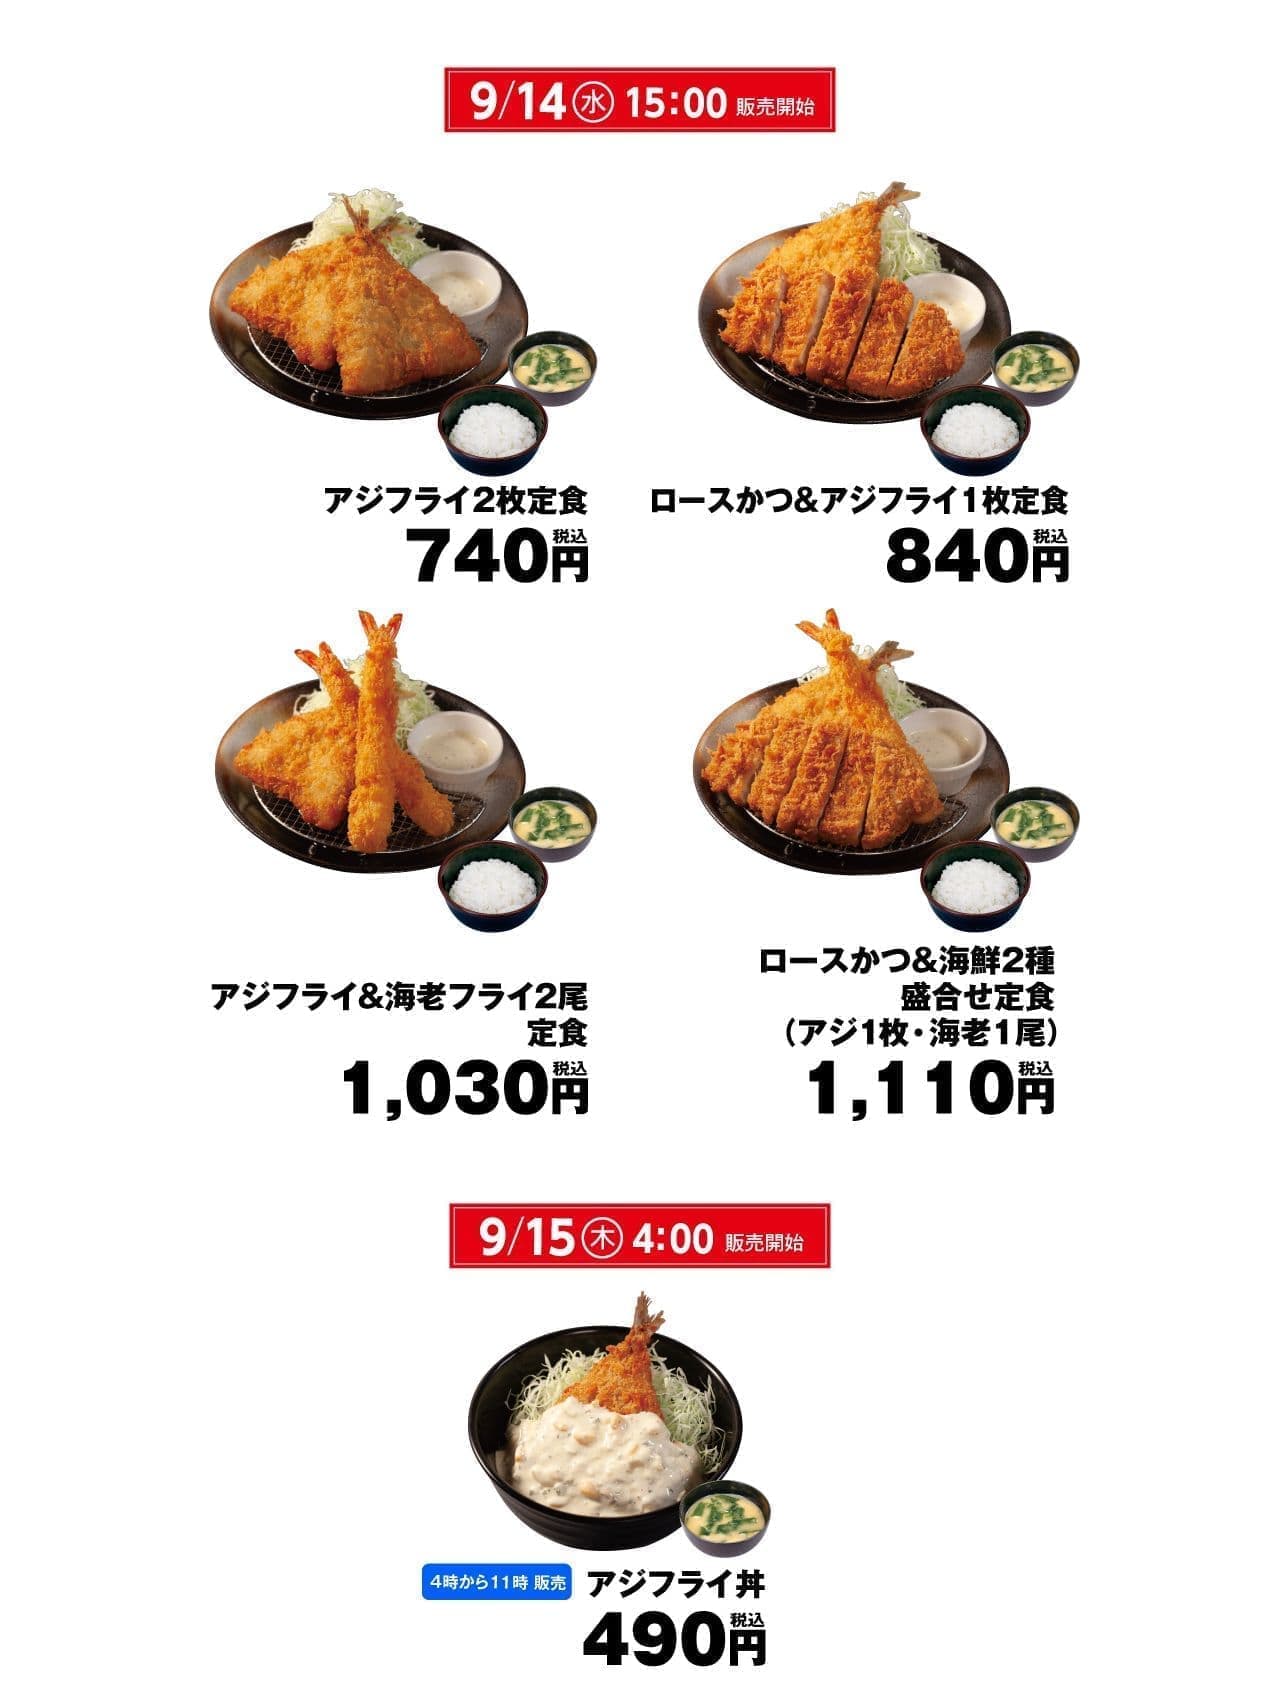 Matsunoya "Fried horse mackerel